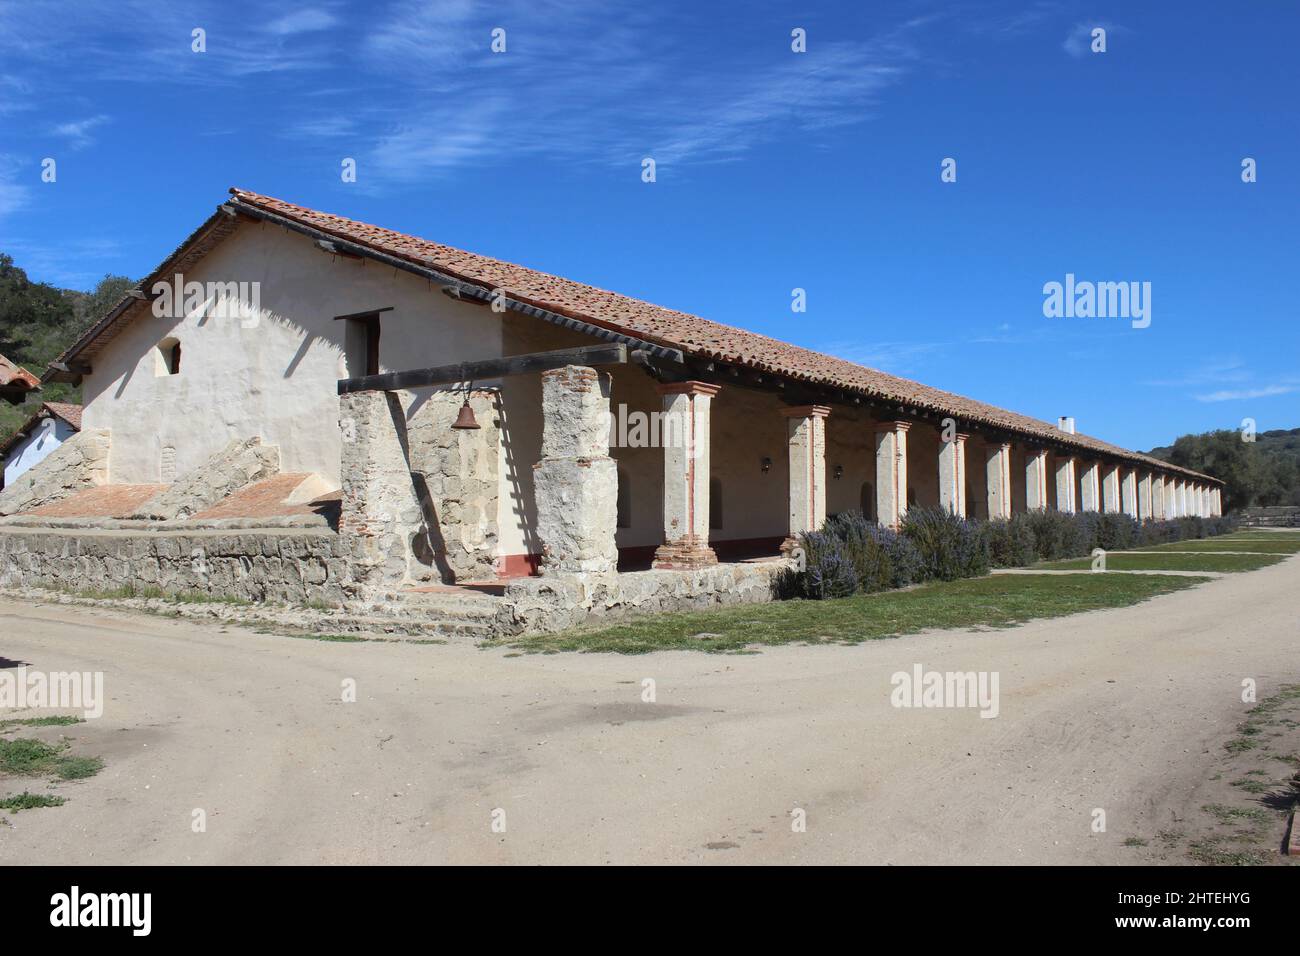 Convento or Padres' Quarters, Mission La Purisima Concepcion, Lompoc, California Stock Photo